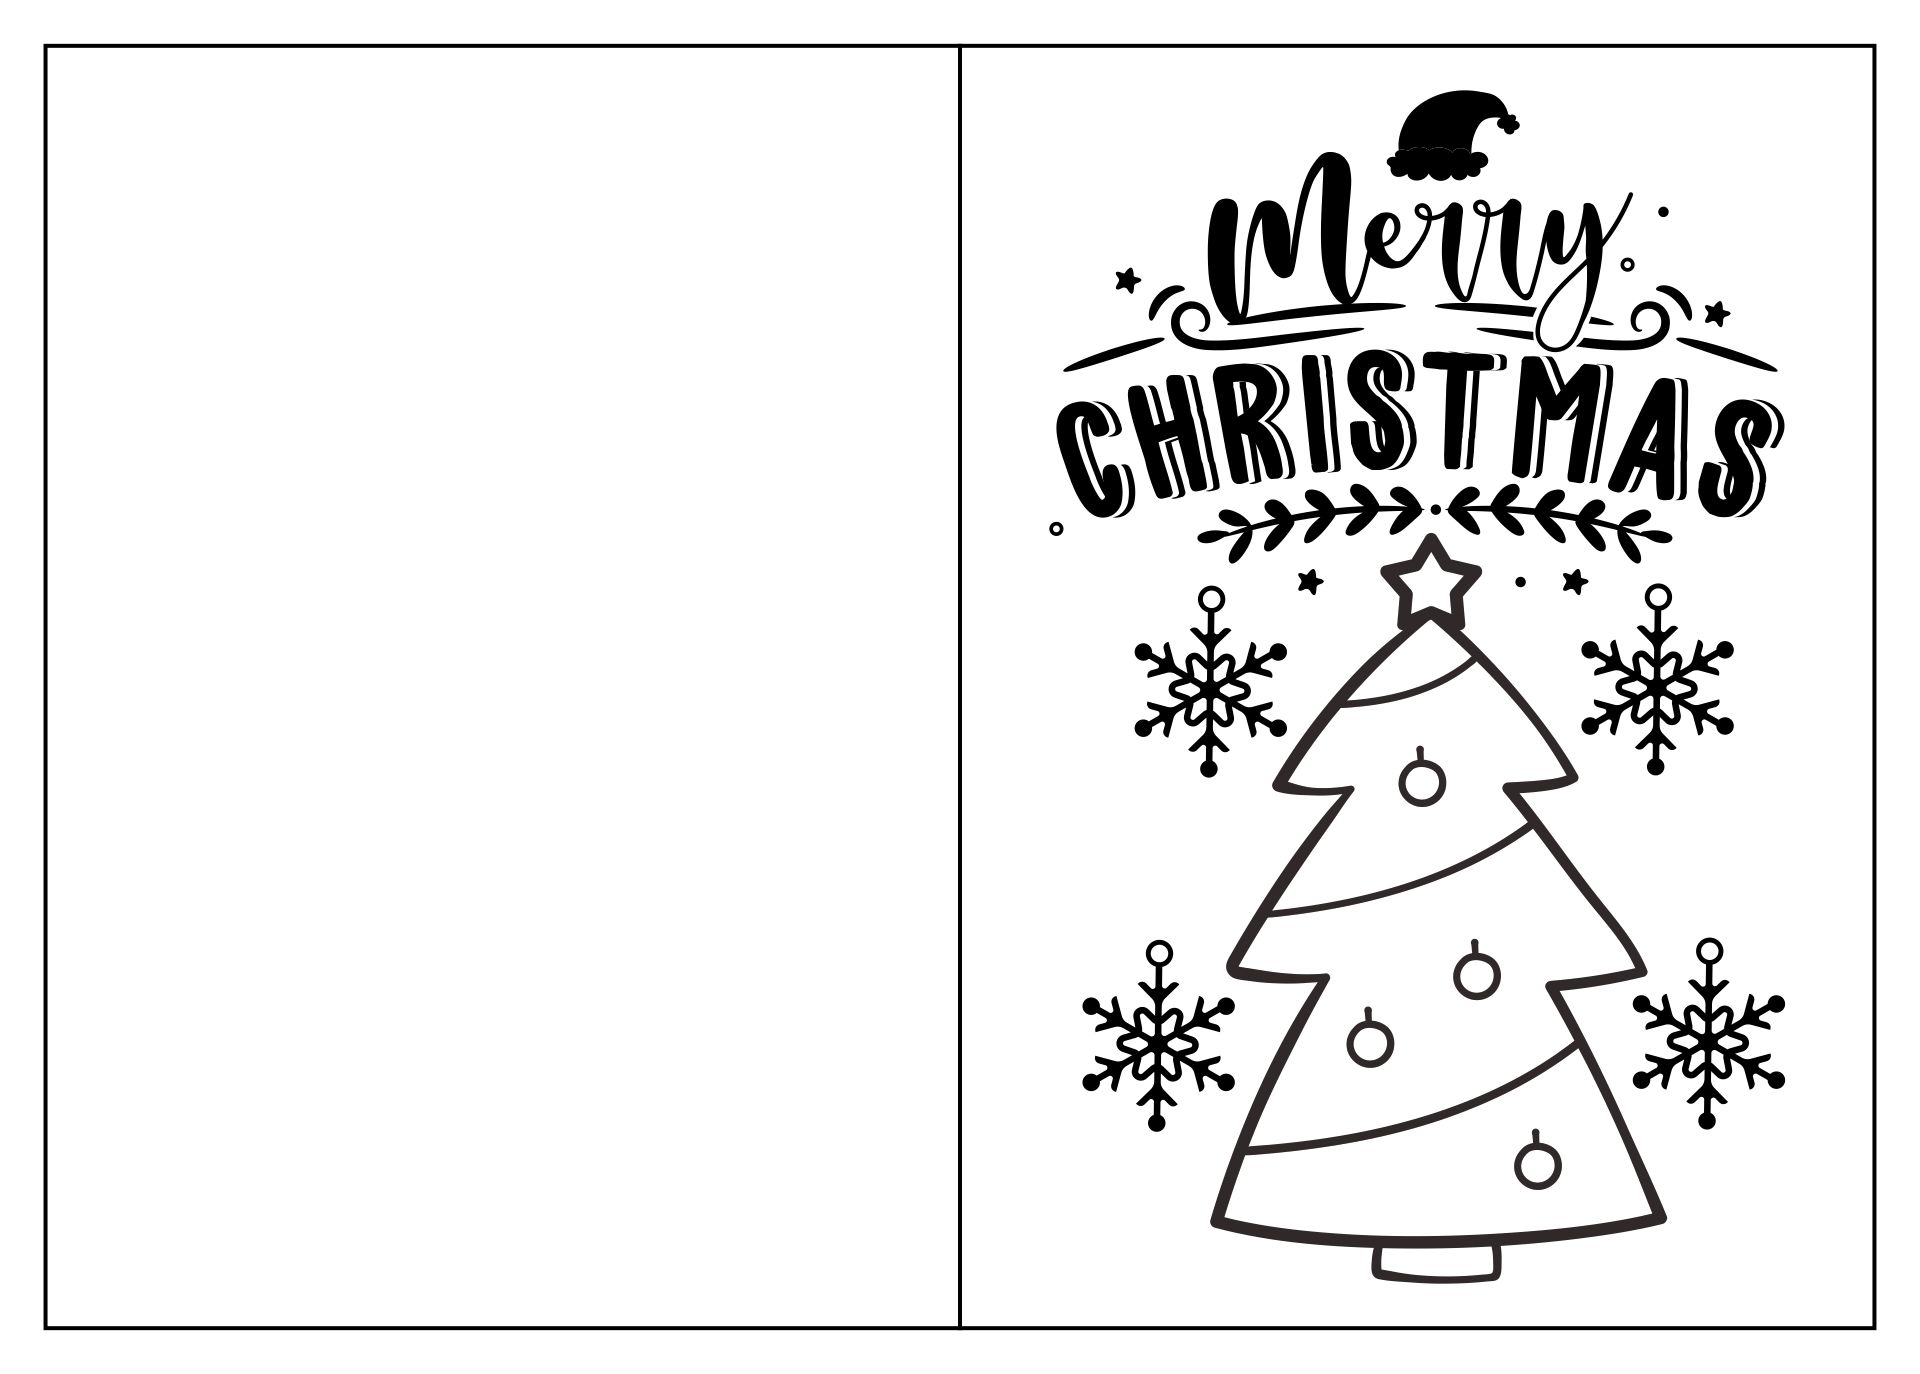 Printable Black And White Holiday Christmas Cards_96228